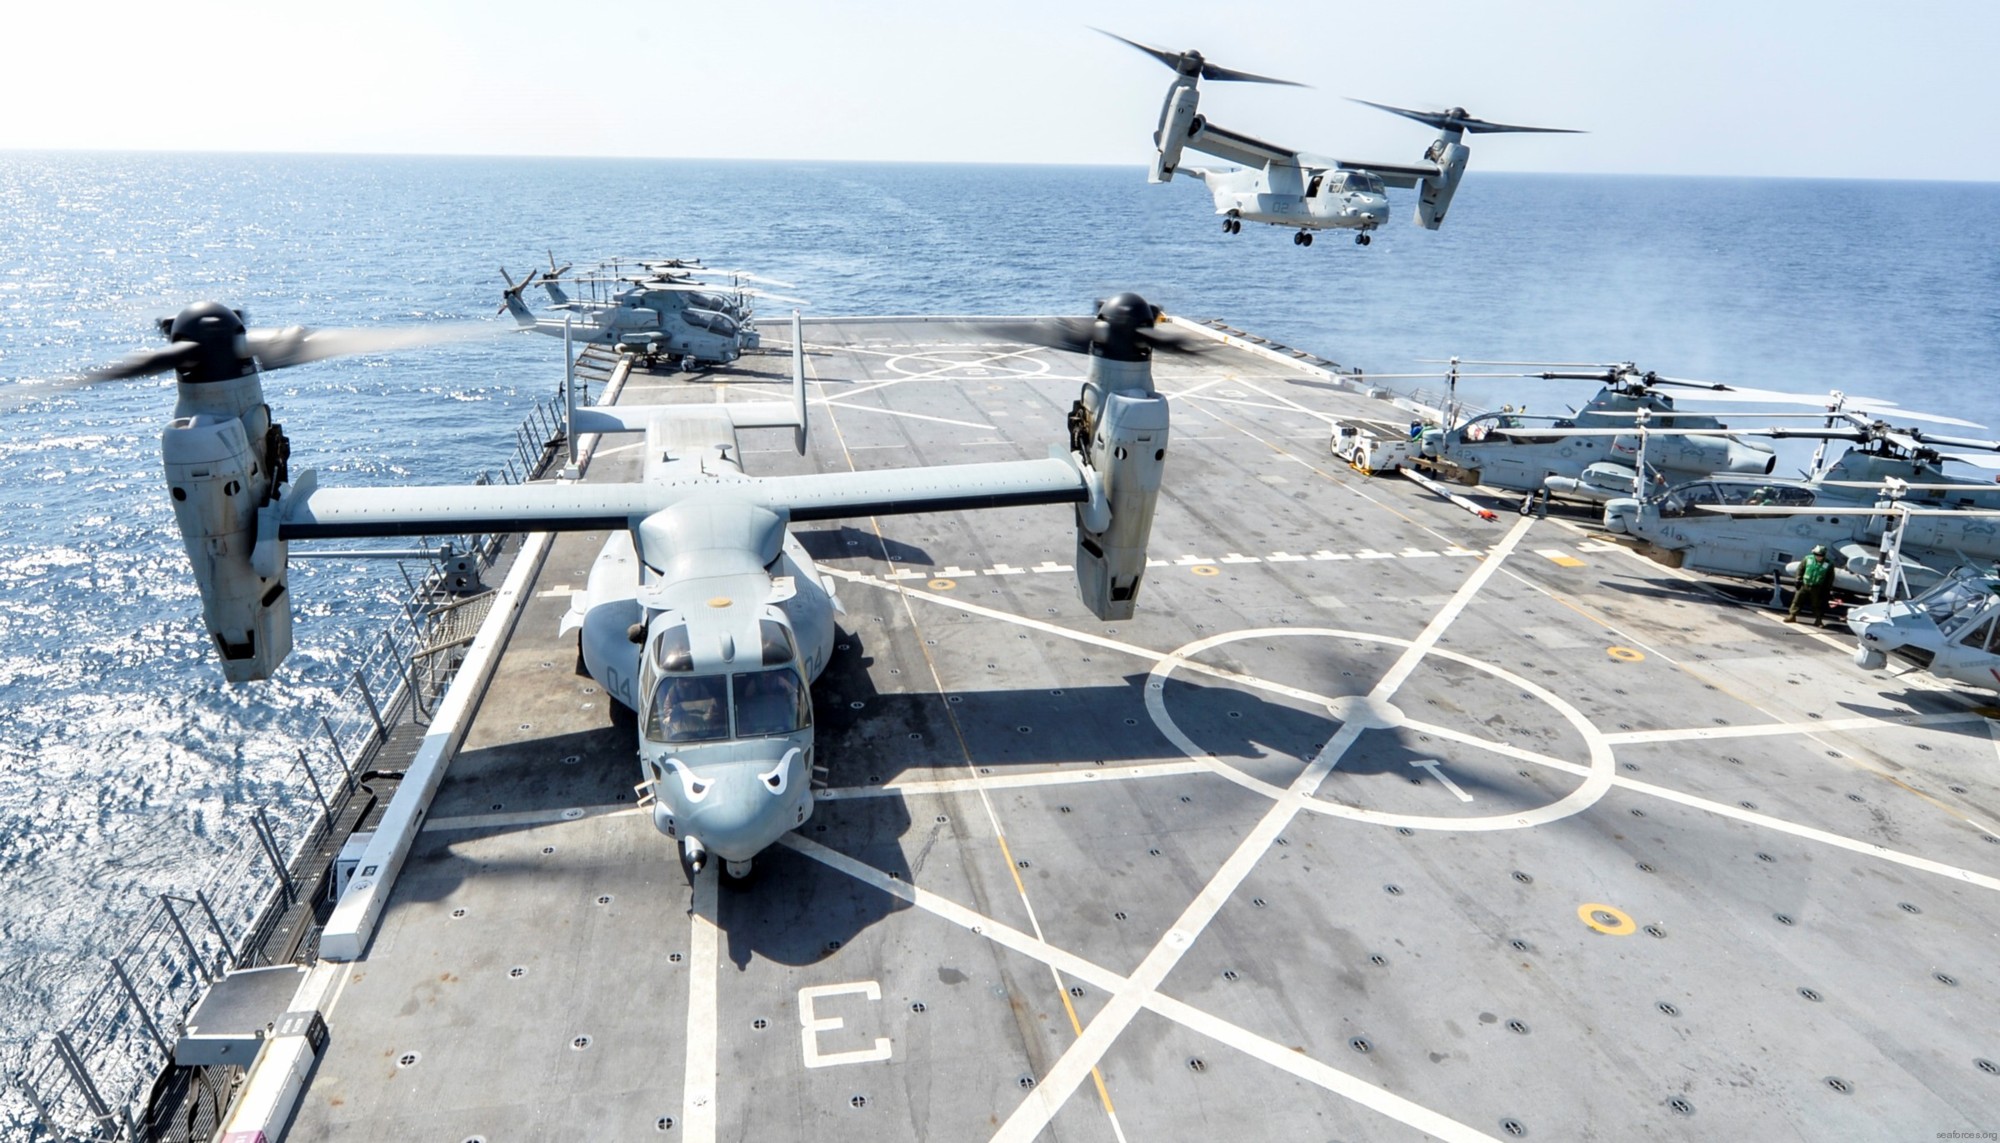 san antonio class amphibious transport dock ship landing platform navy 23x flight deck mv-22b osprey